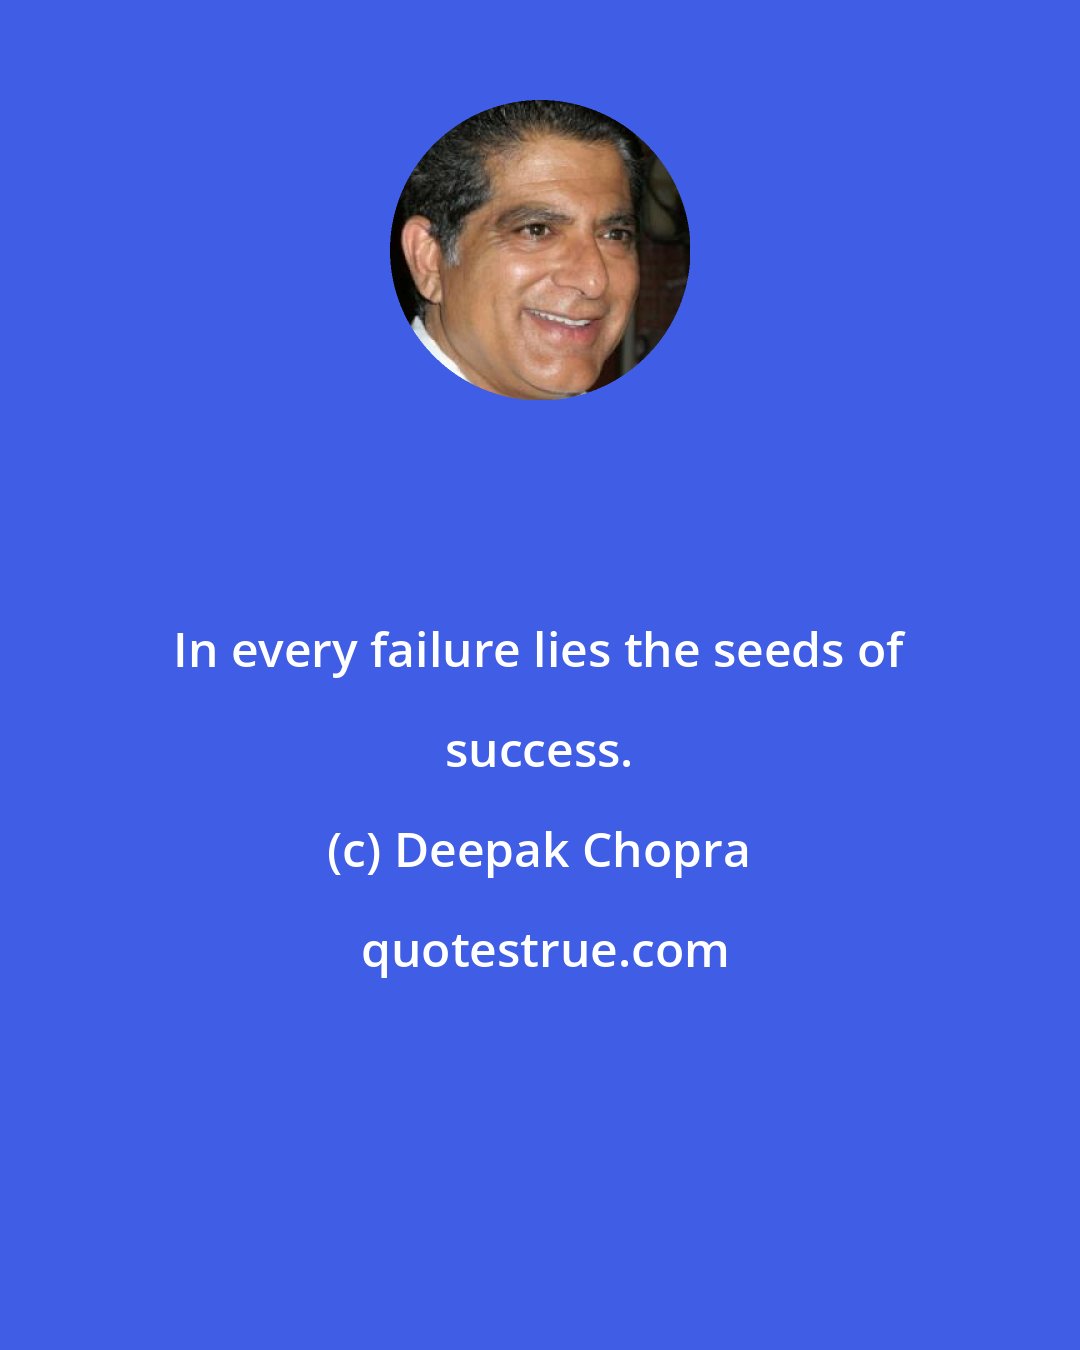 Deepak Chopra: In every failure lies the seeds of success.